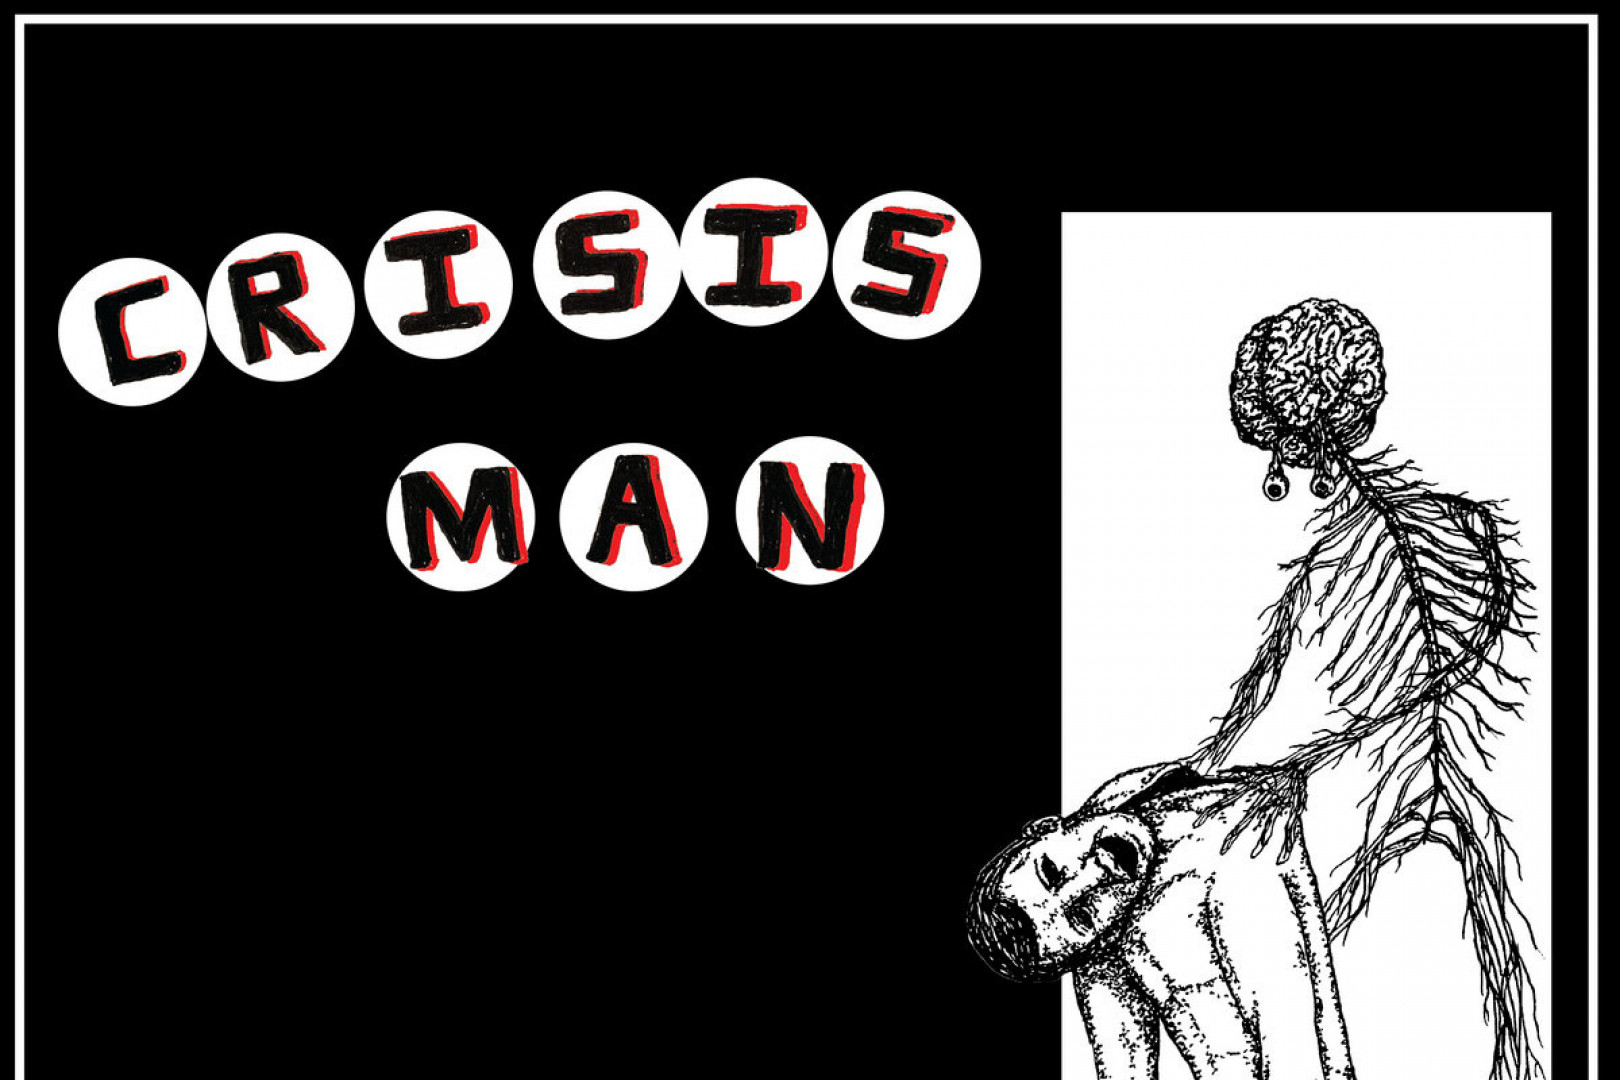 Crisis Man to release new album